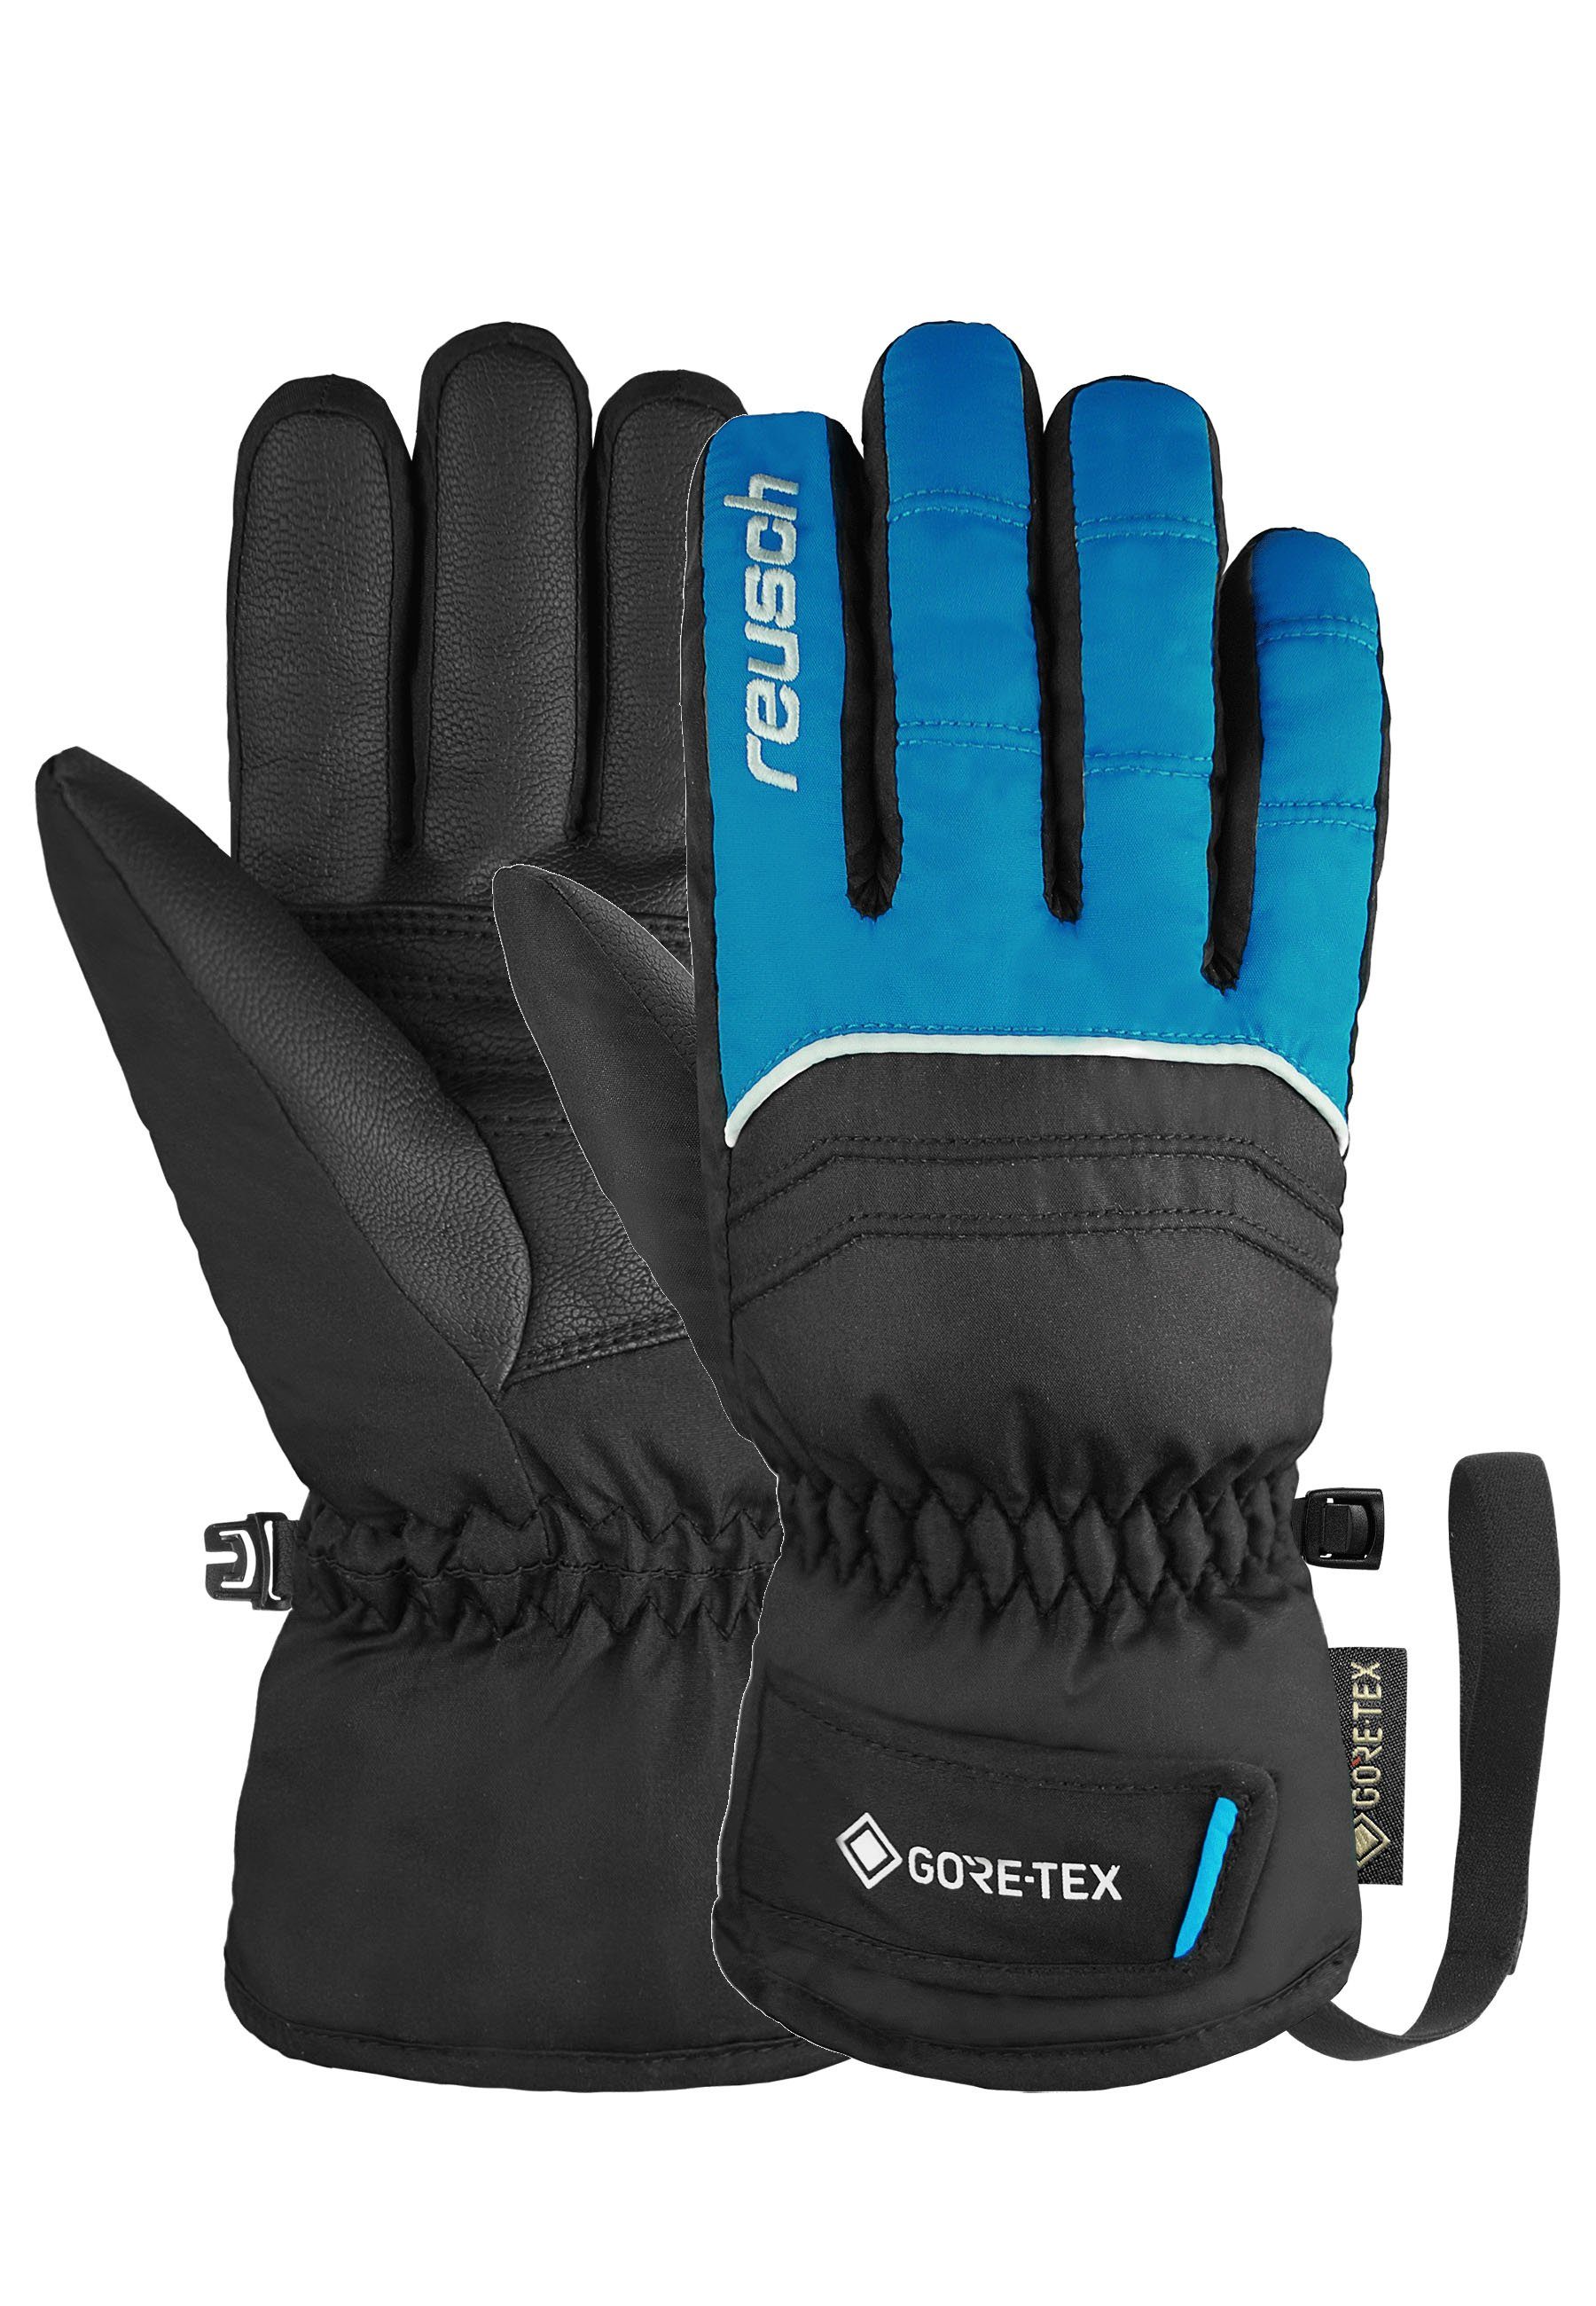 Reusch Skihandschuhe Teddy GORE-TEX mit wasserdichter Funktionsmembran blau-schwarz | Handschuhe